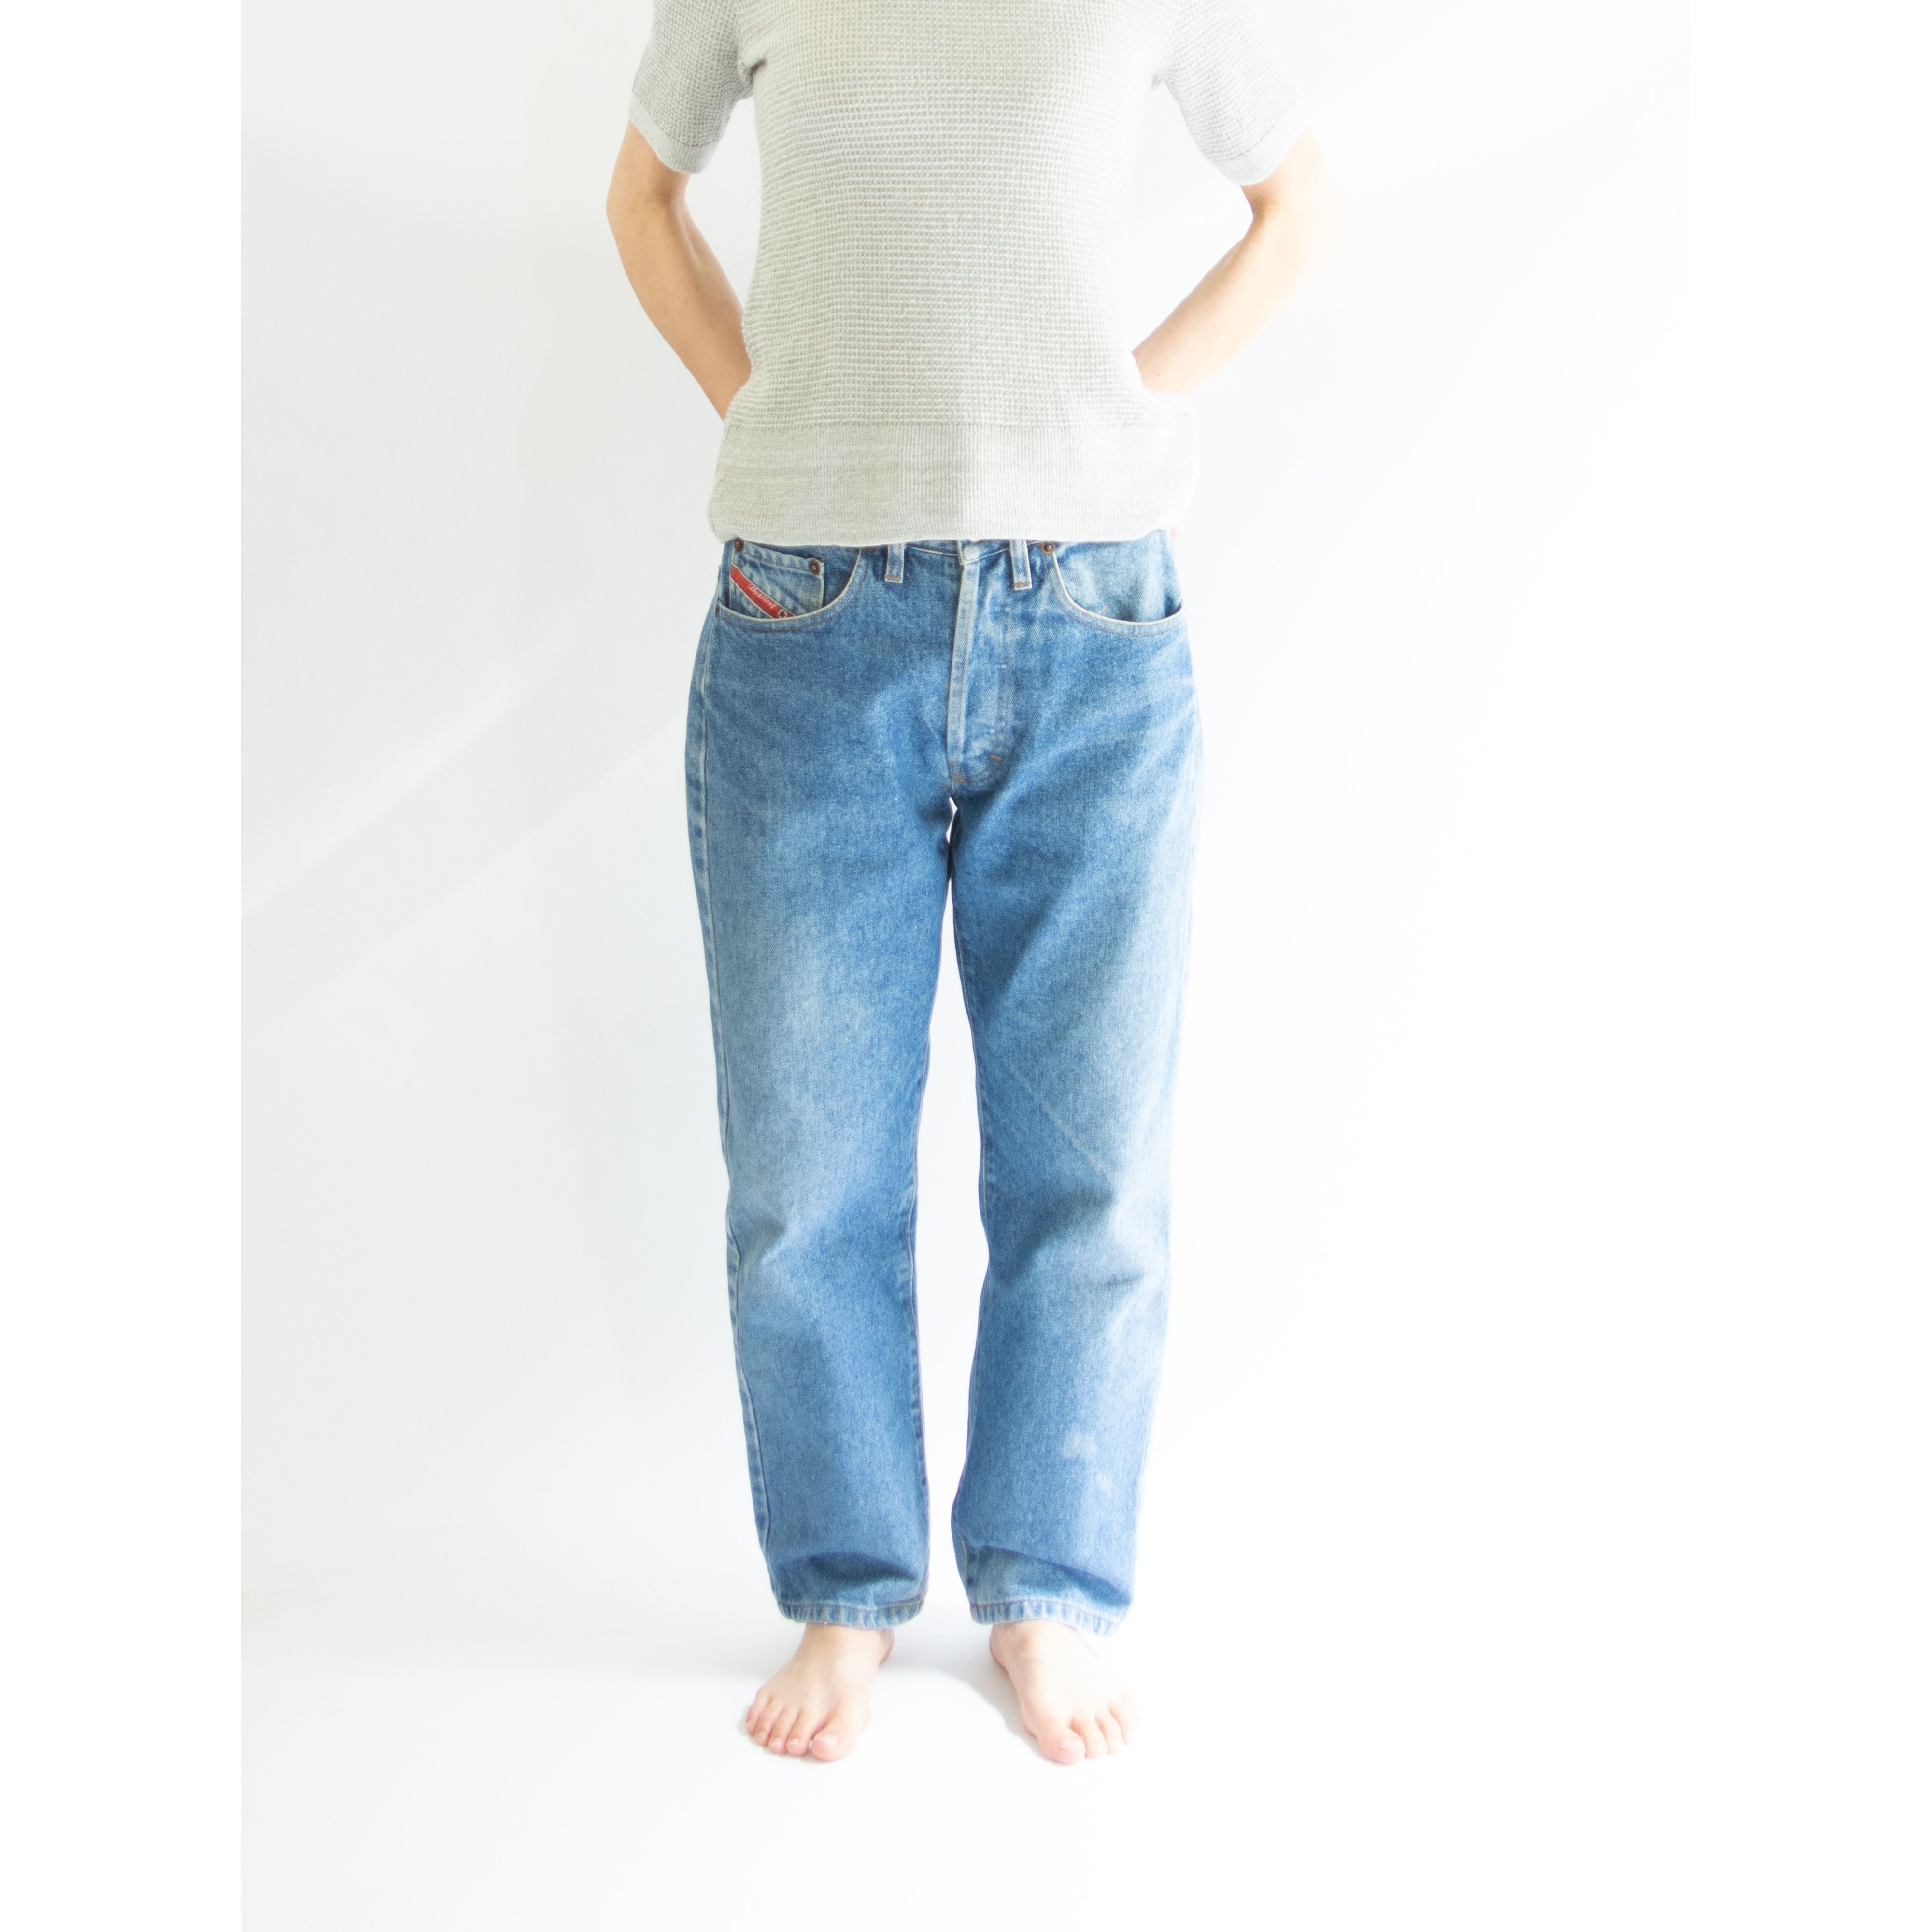 【DIESEL】Made in Italy 90's Tapered Jeans（ディーゼル イタリア製テーパード ジーンズ デニムパンツ ）